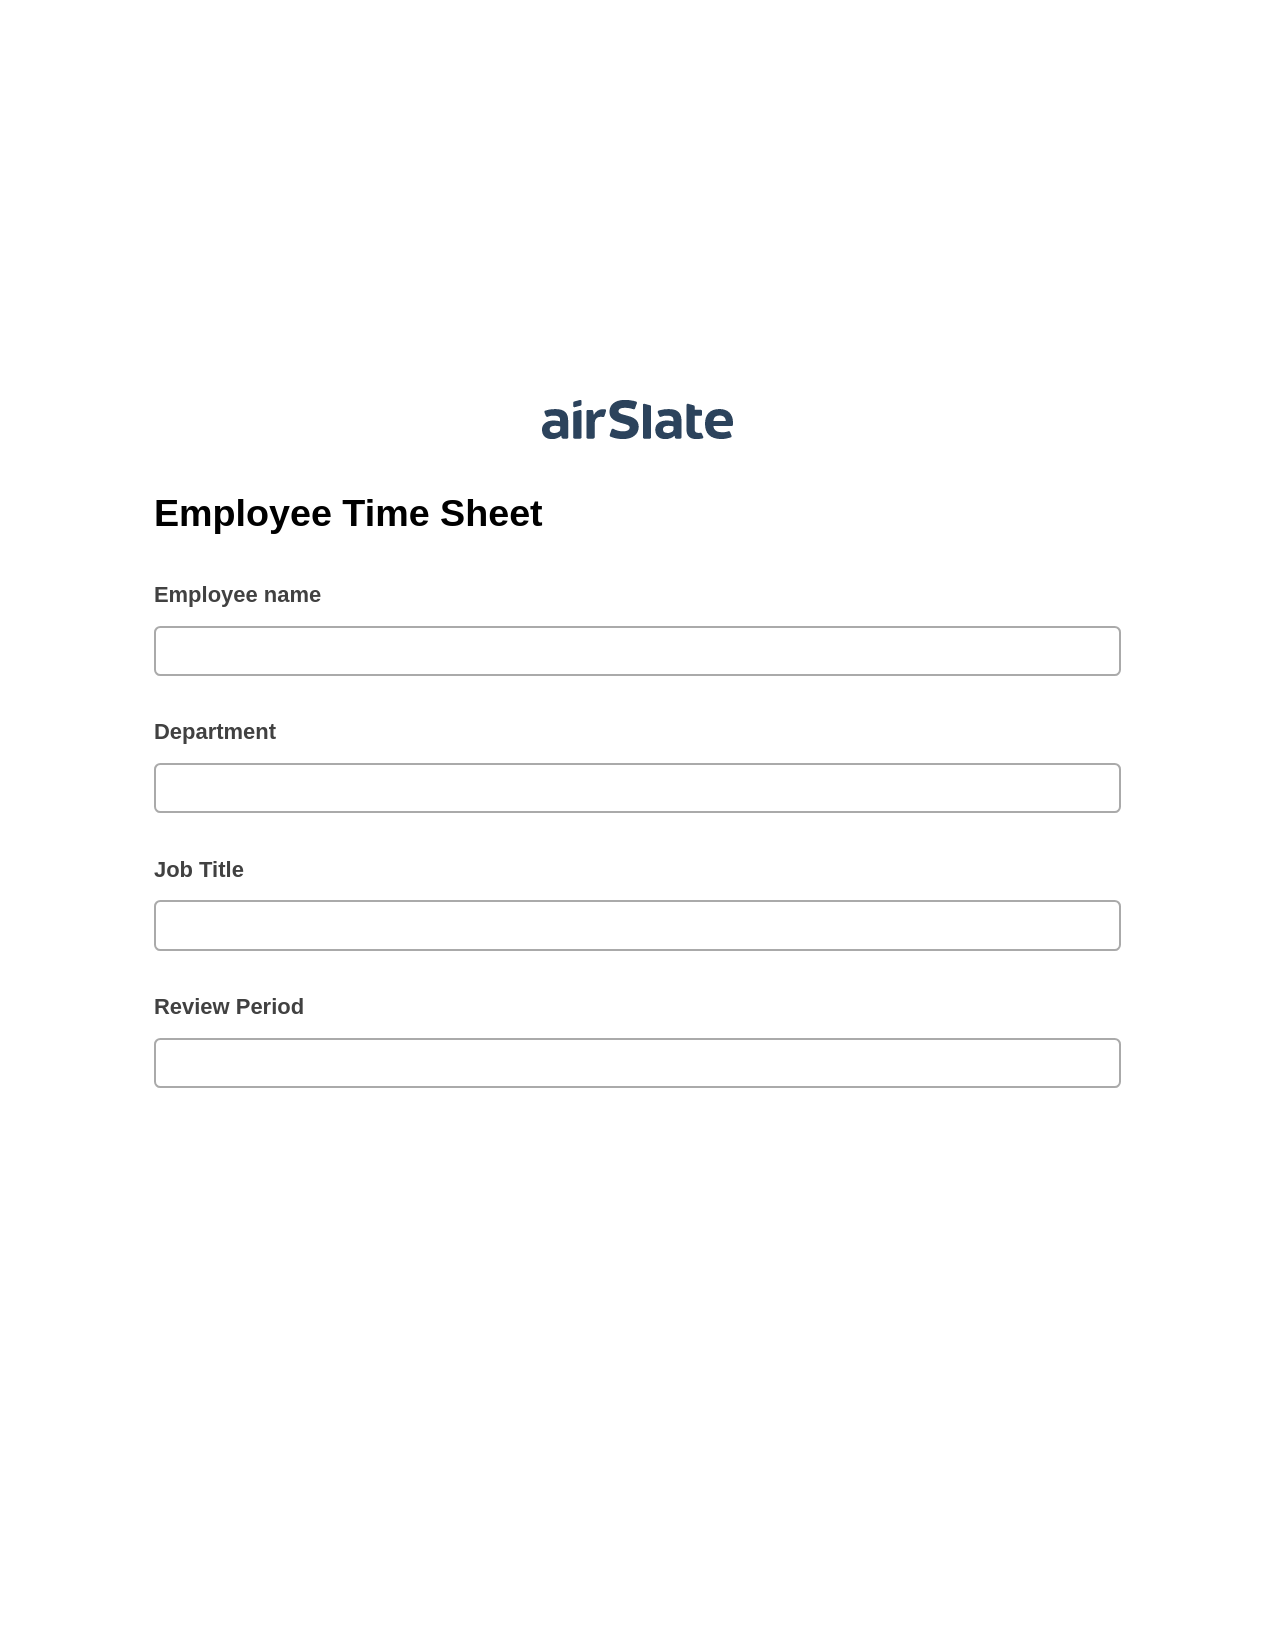 Employee Time Sheet Pre-fill from CSV File Bot, Invoke Salesforce Process Bot, Export to Google Sheet Bot